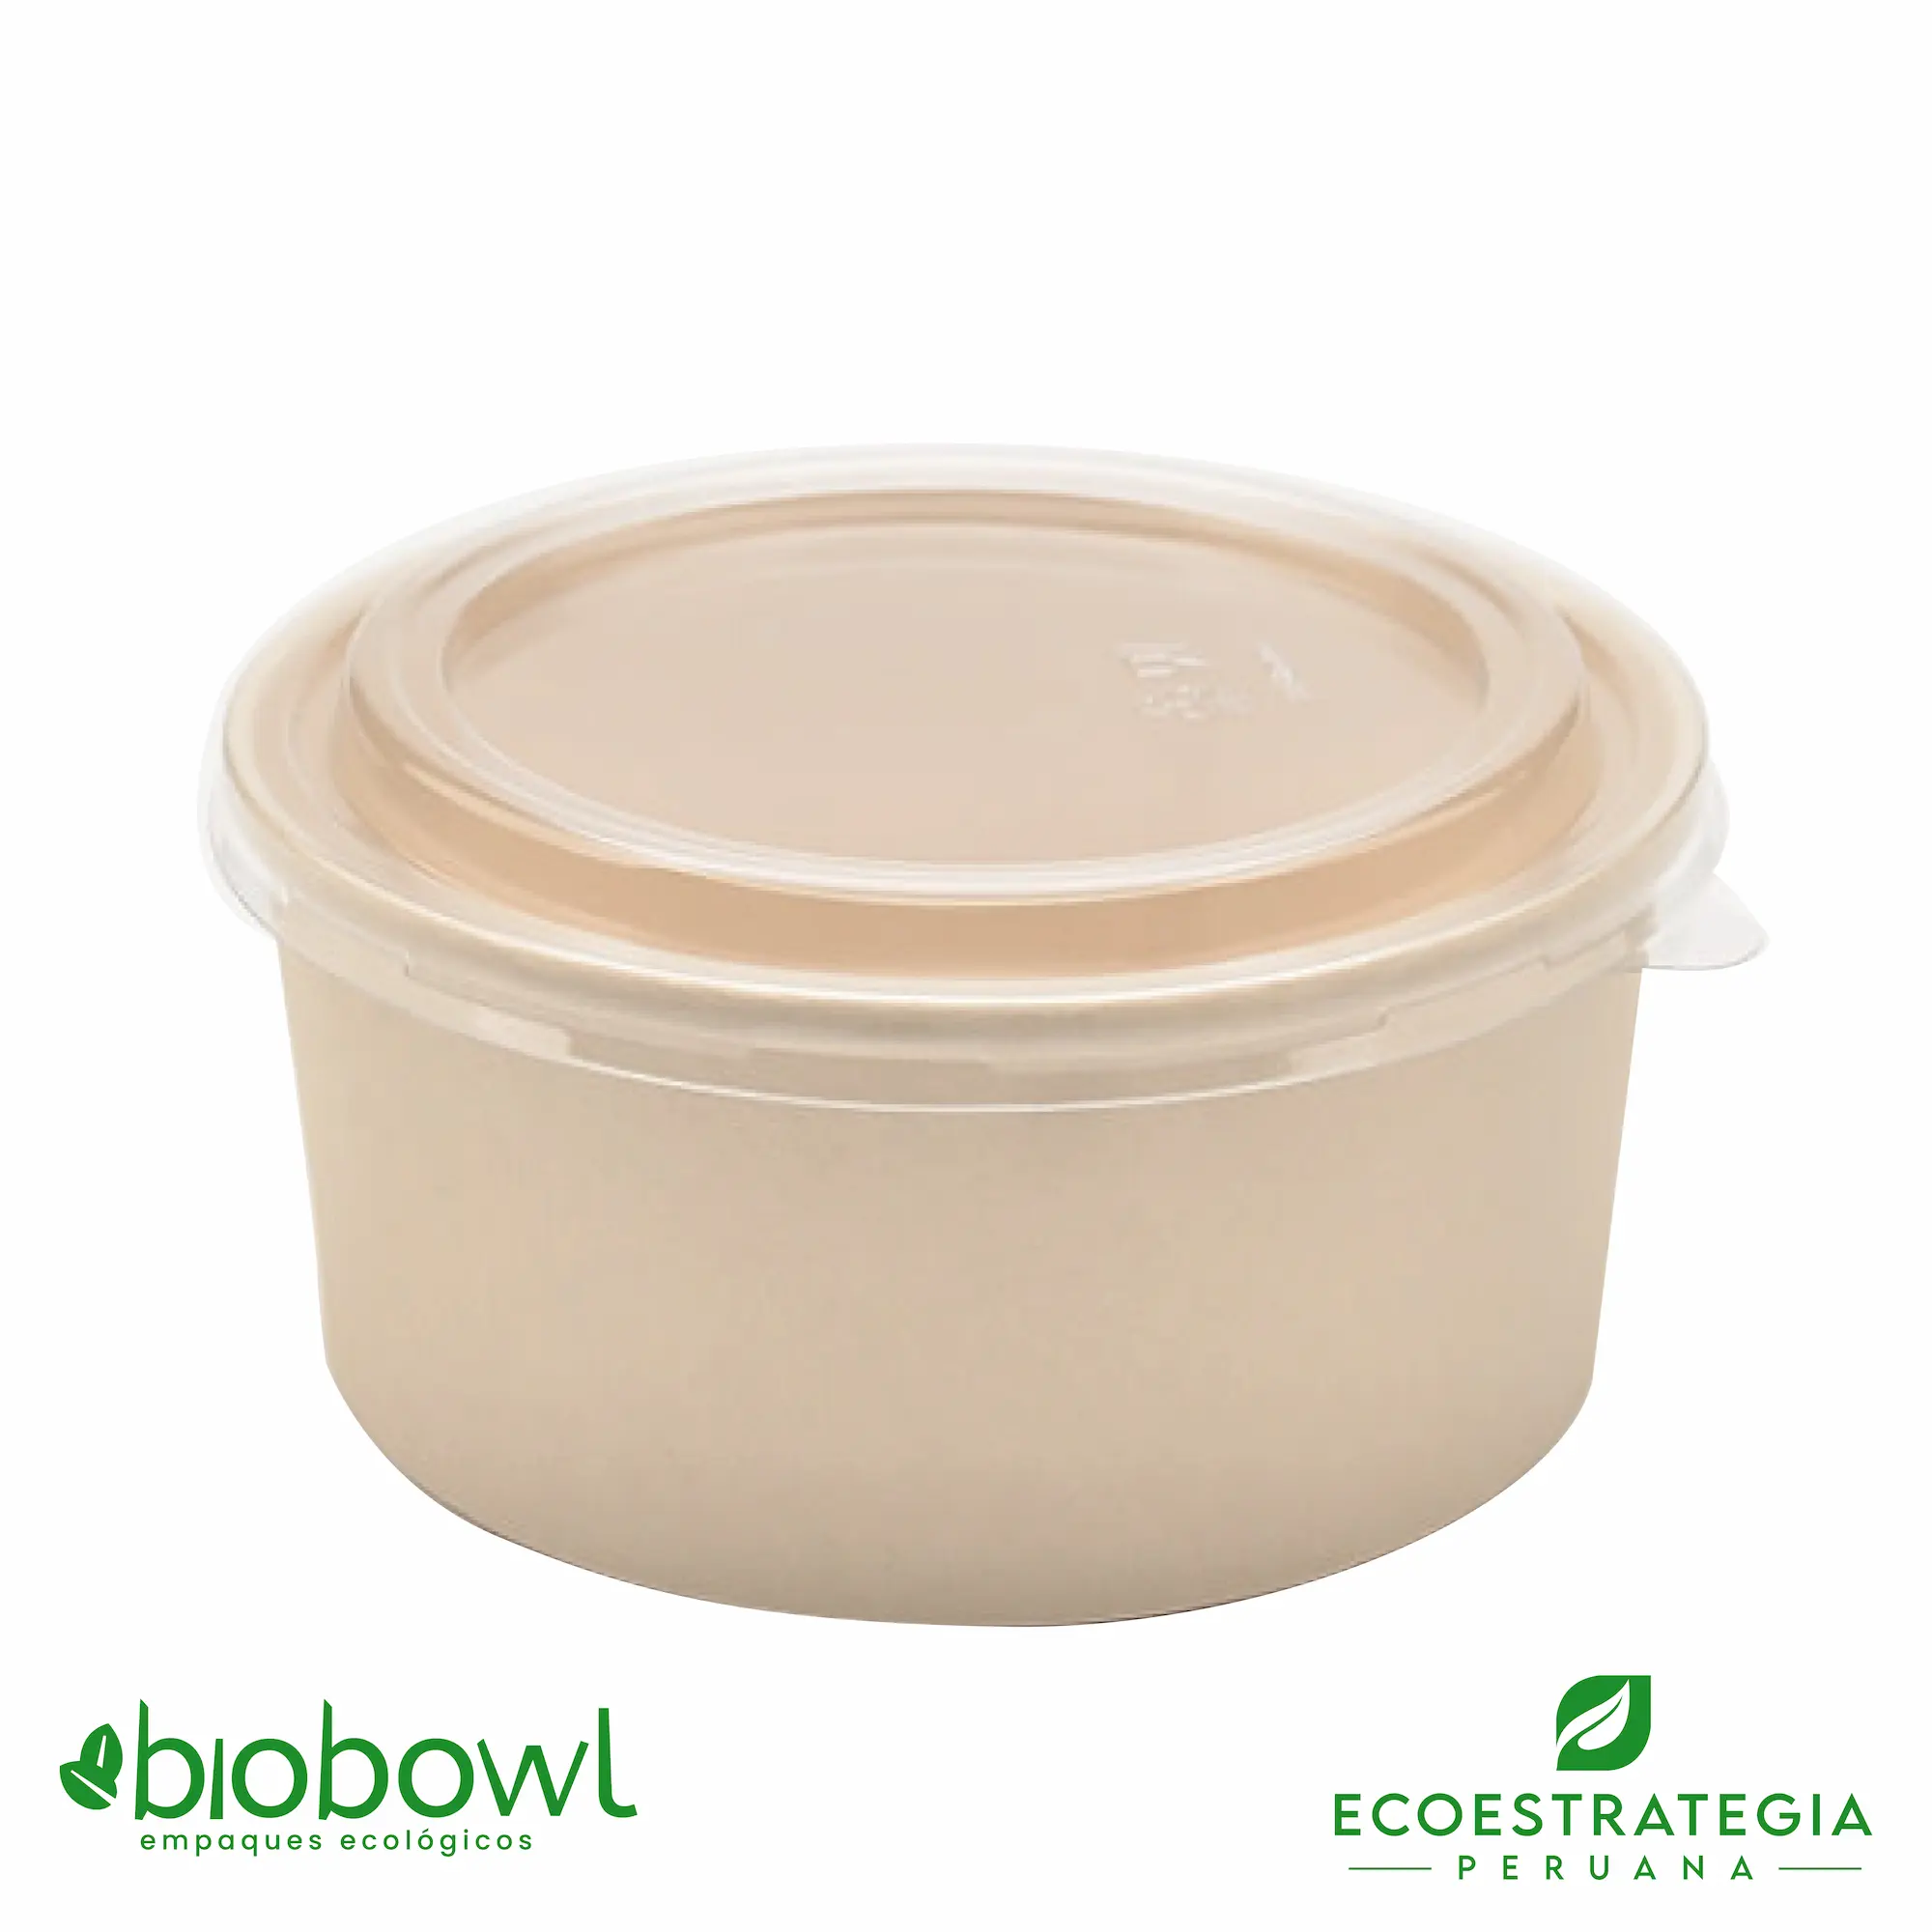 Esta bowl biodegradable de 1000 ml es a base de fibra de bambu. Envases descartables con gramaje ideal, cotiza tus empaques, platos y tapers para ensaladas